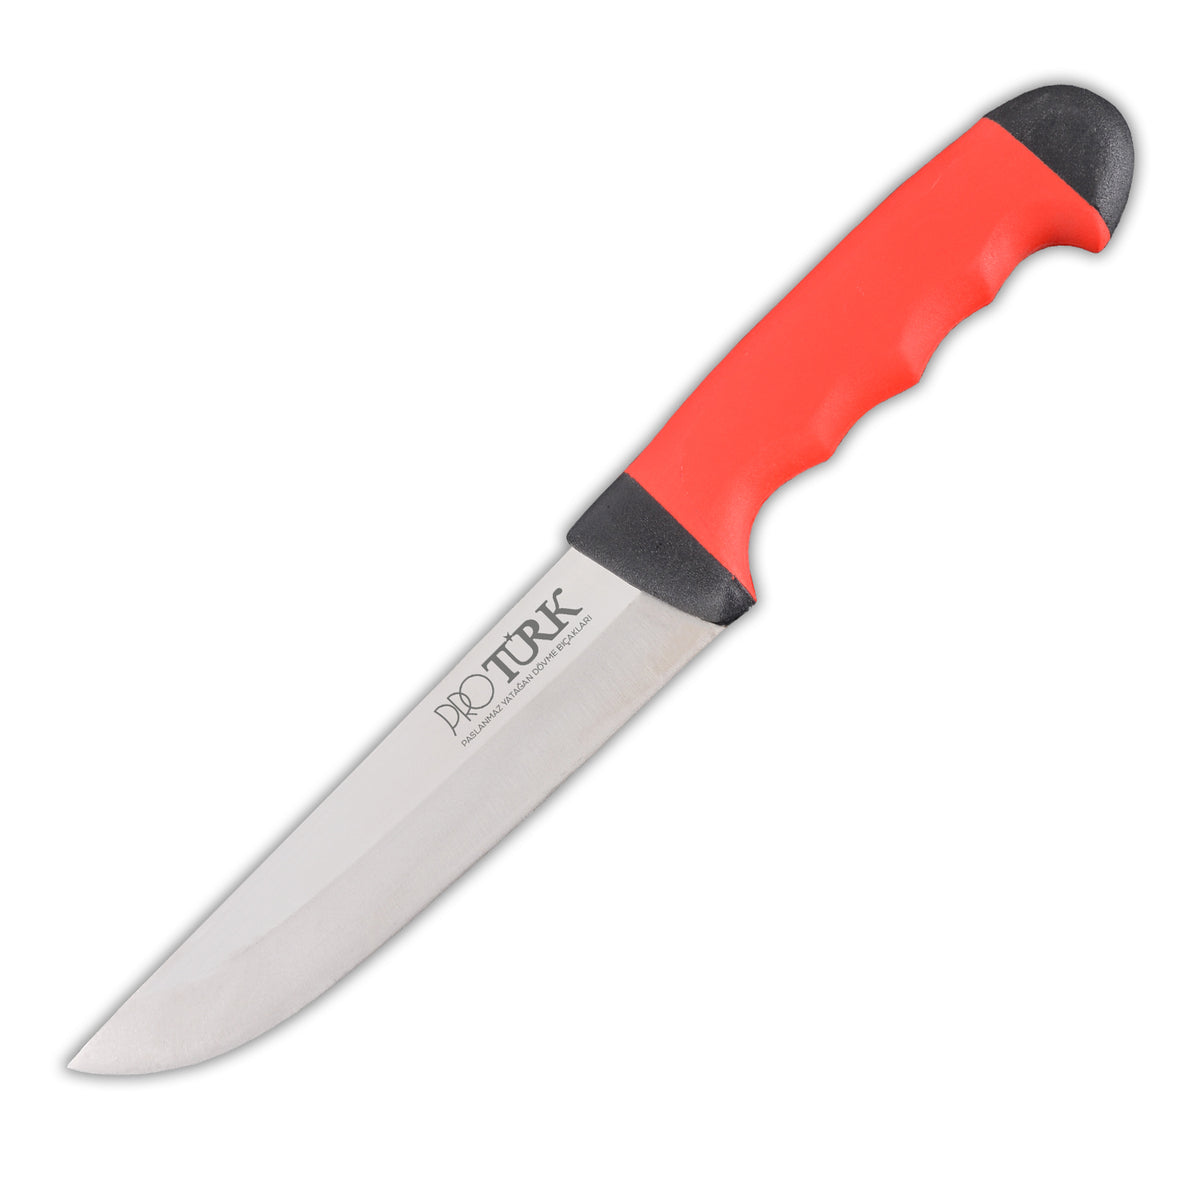 Protürk Et Bıçağı 2 Numara